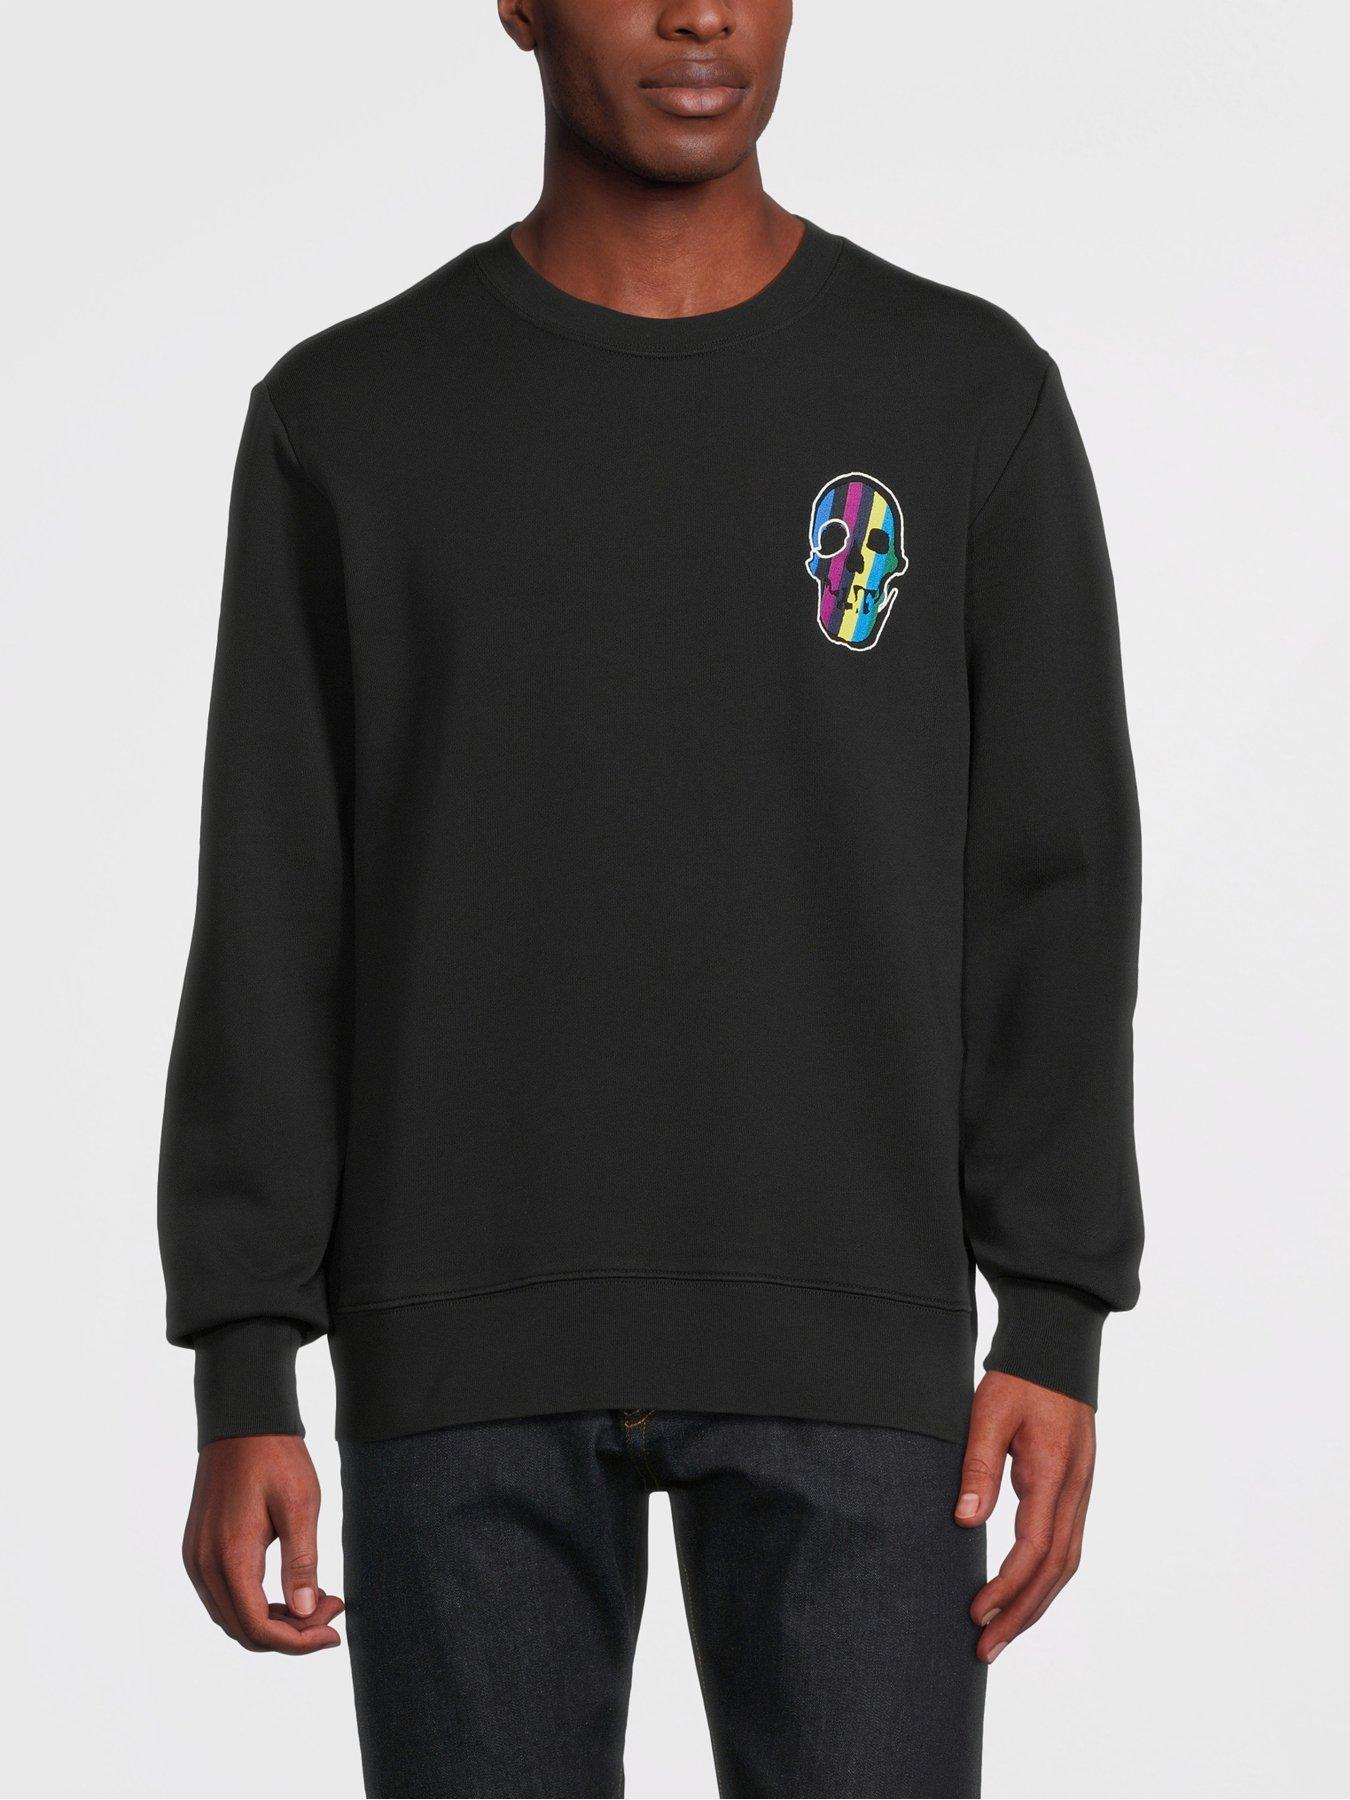 M | Hoodies & sweatshirts | Designer brands | www.very.co.uk